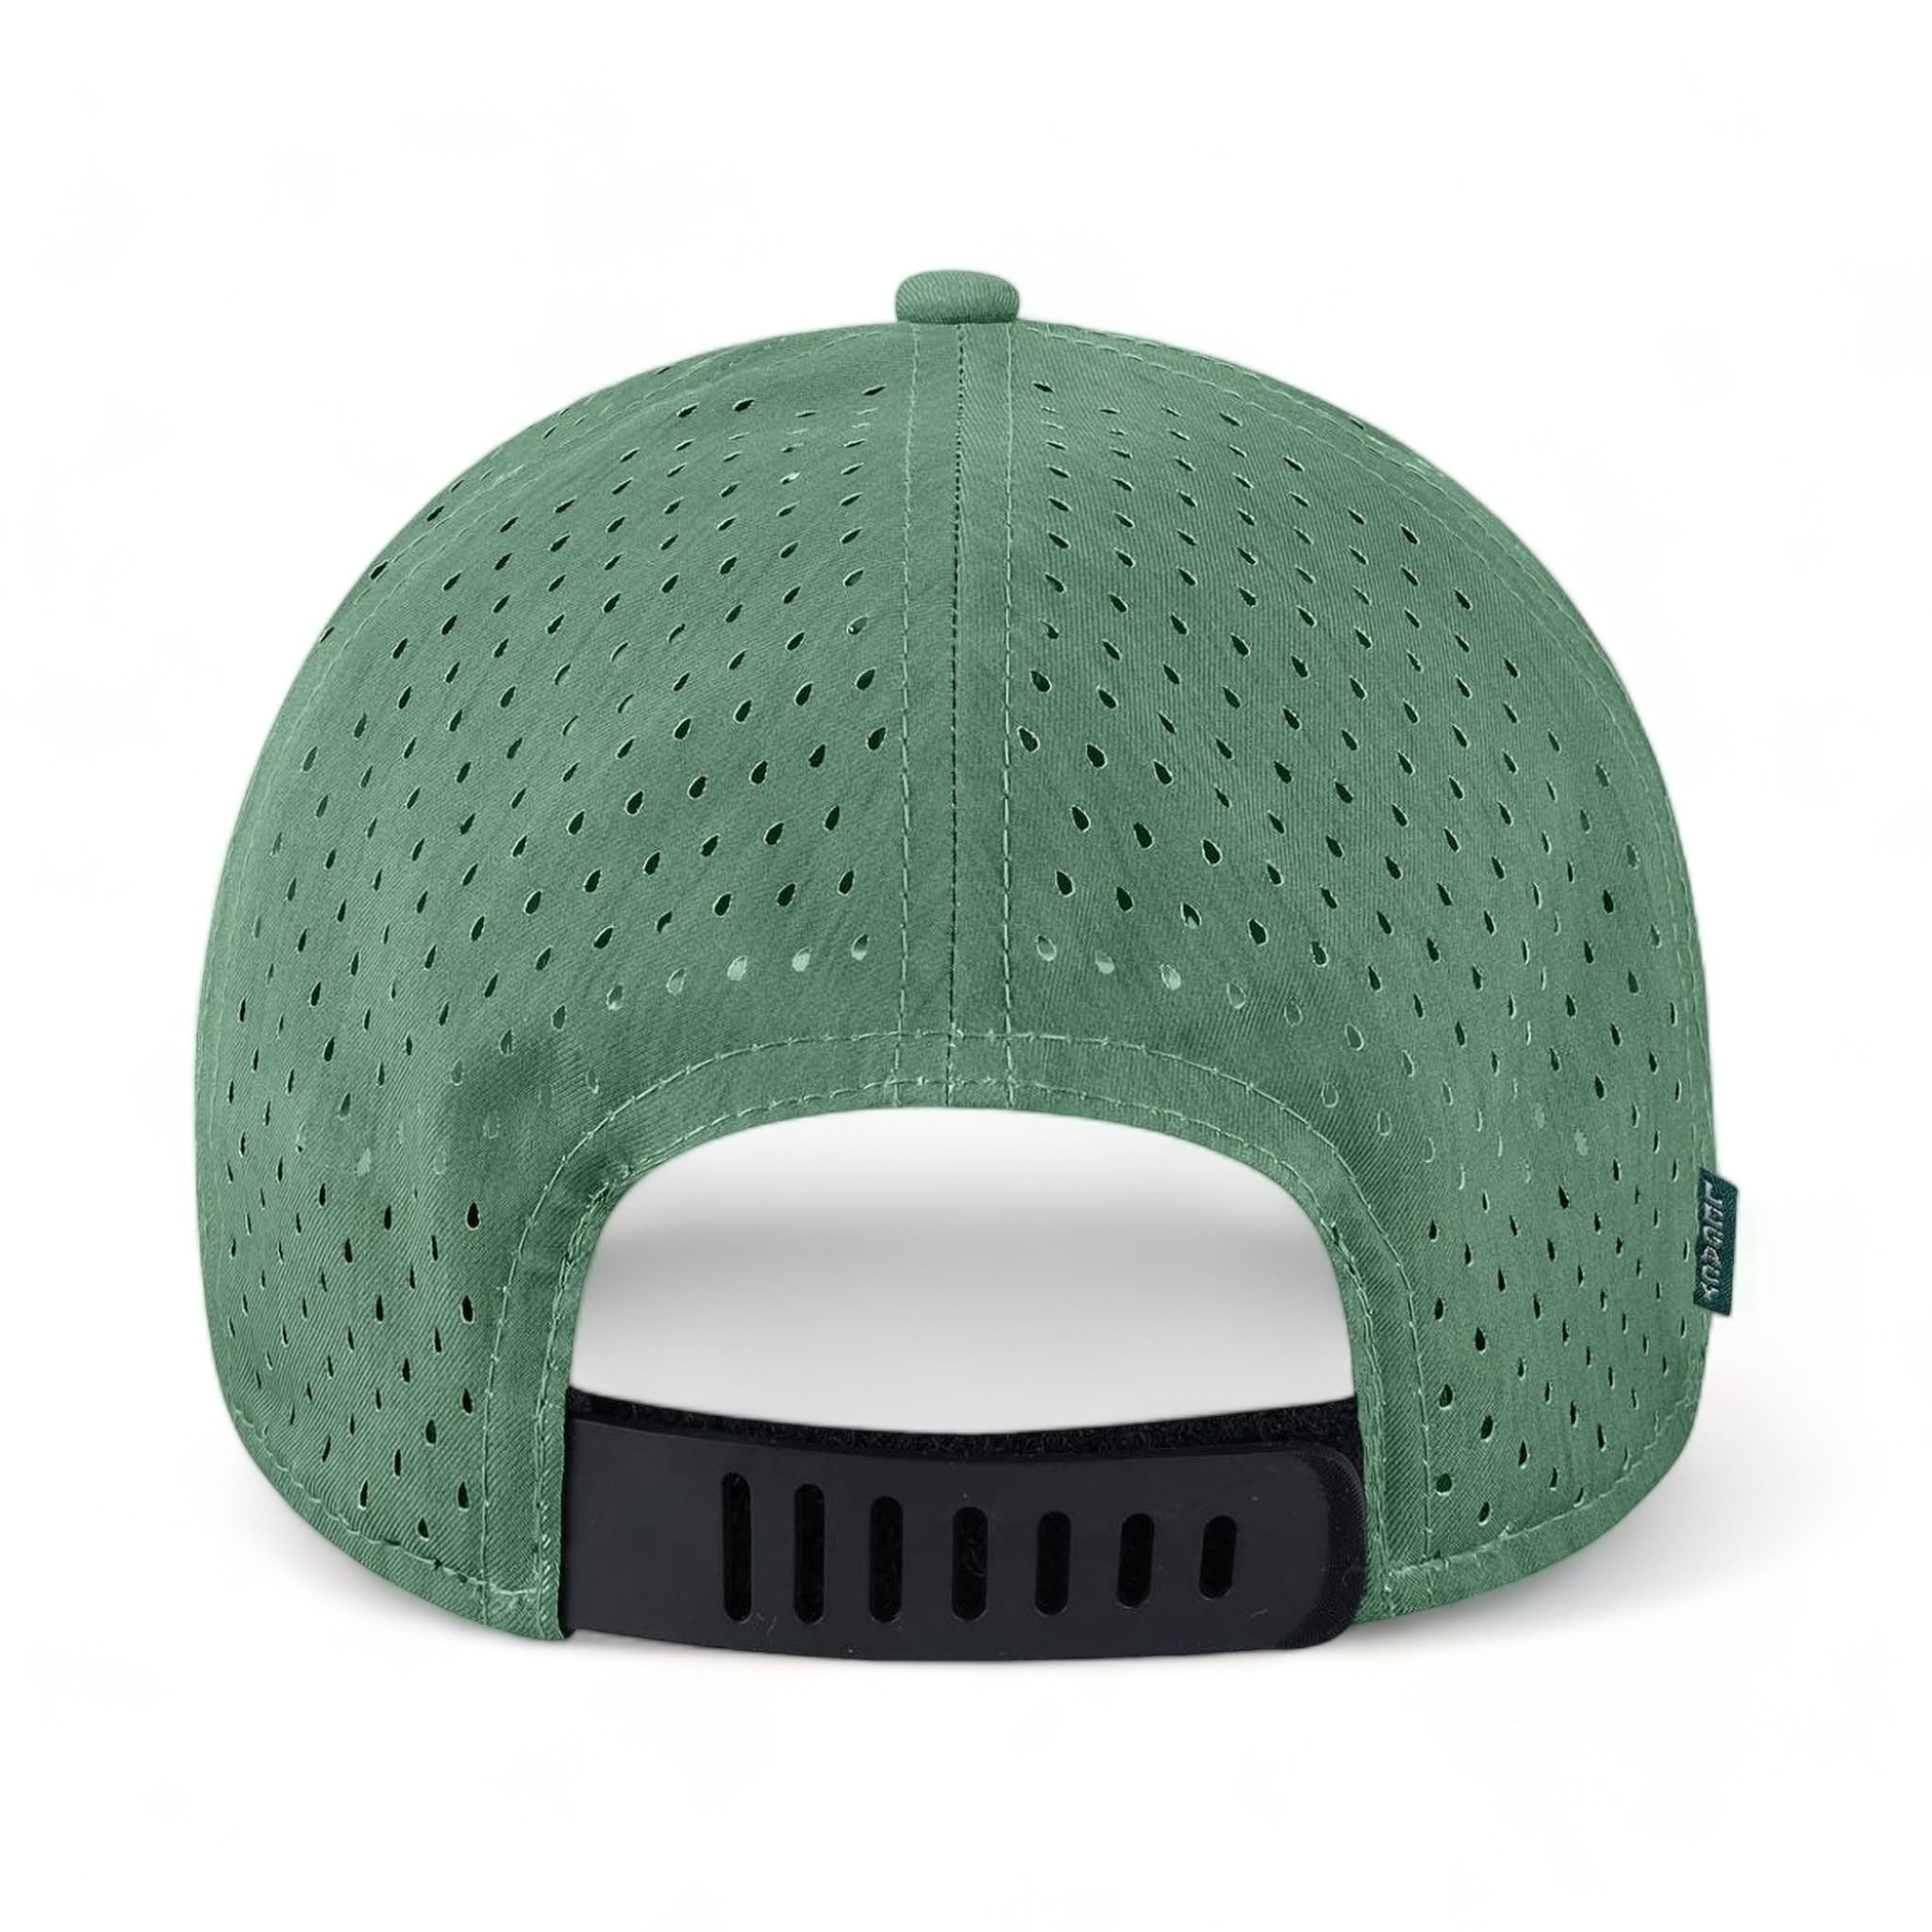 Back view of LEGACY REMPA custom hat in eco dark green